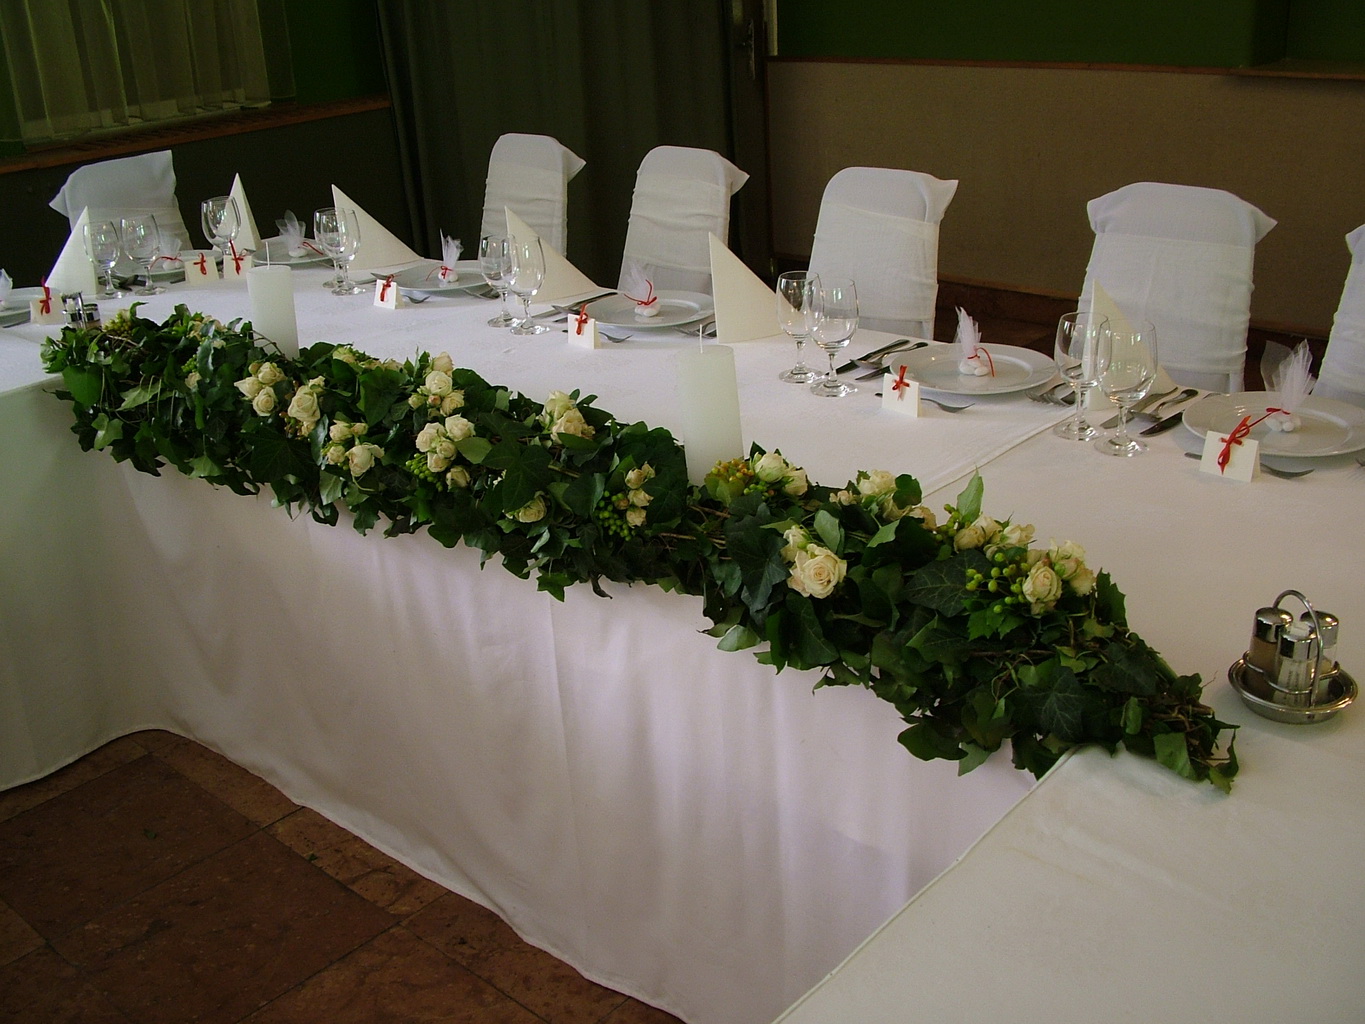 flower delivery Budapest - Main table centerpiece (spray roses, cream), Dudok Budapest, wedding